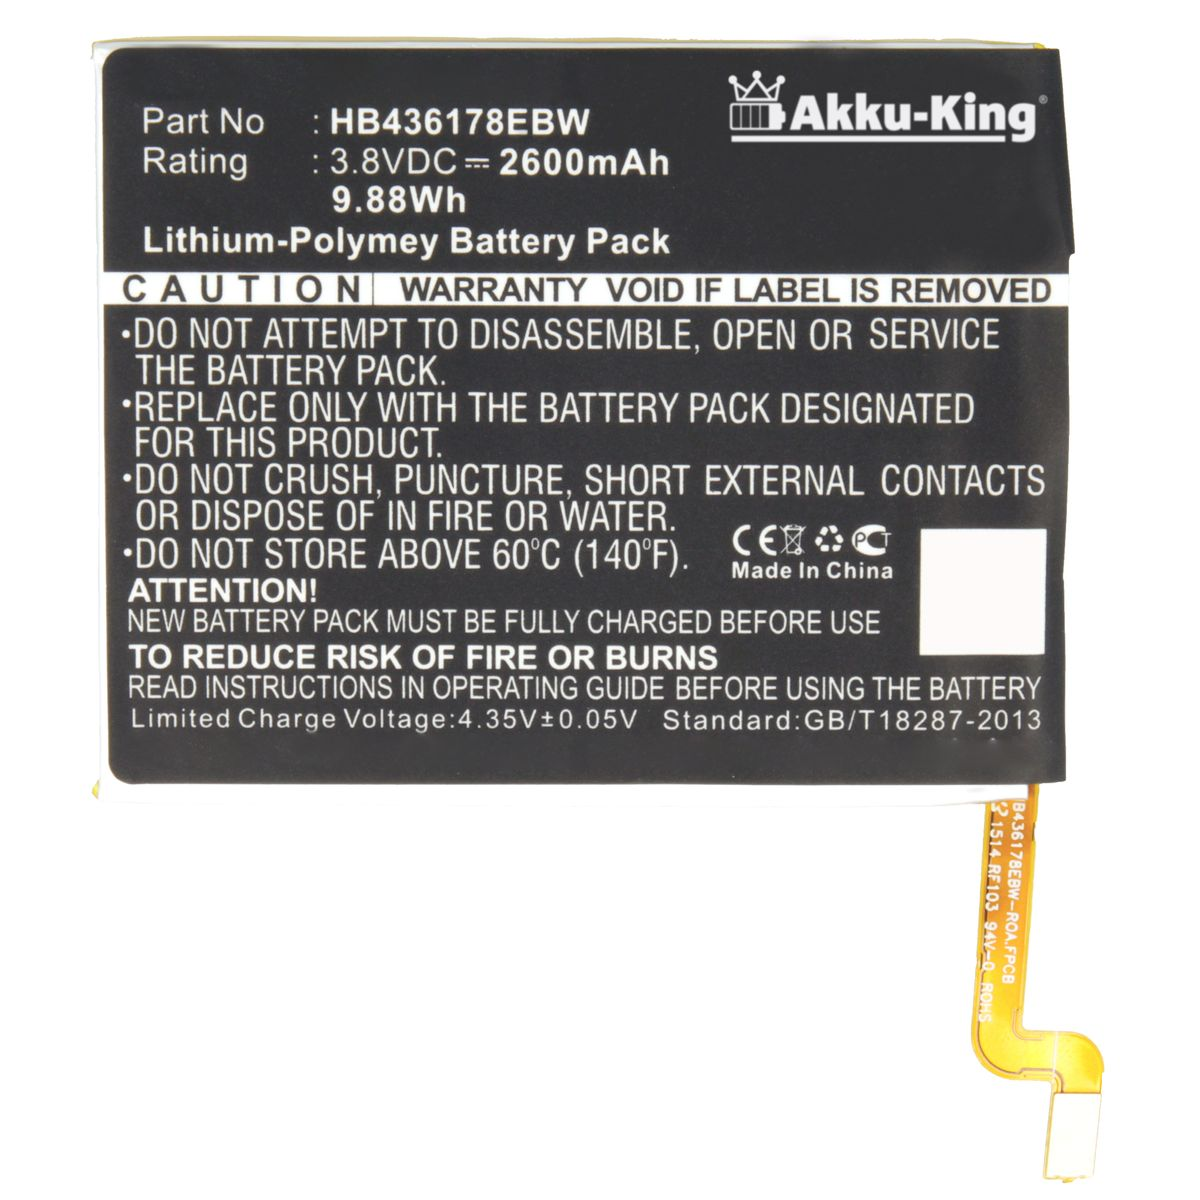 AKKU-KING Akku kompatibel mit 2600mAh Volt, Li-Polymer Huawei Handy-Akku, HB436178EBW 3.8